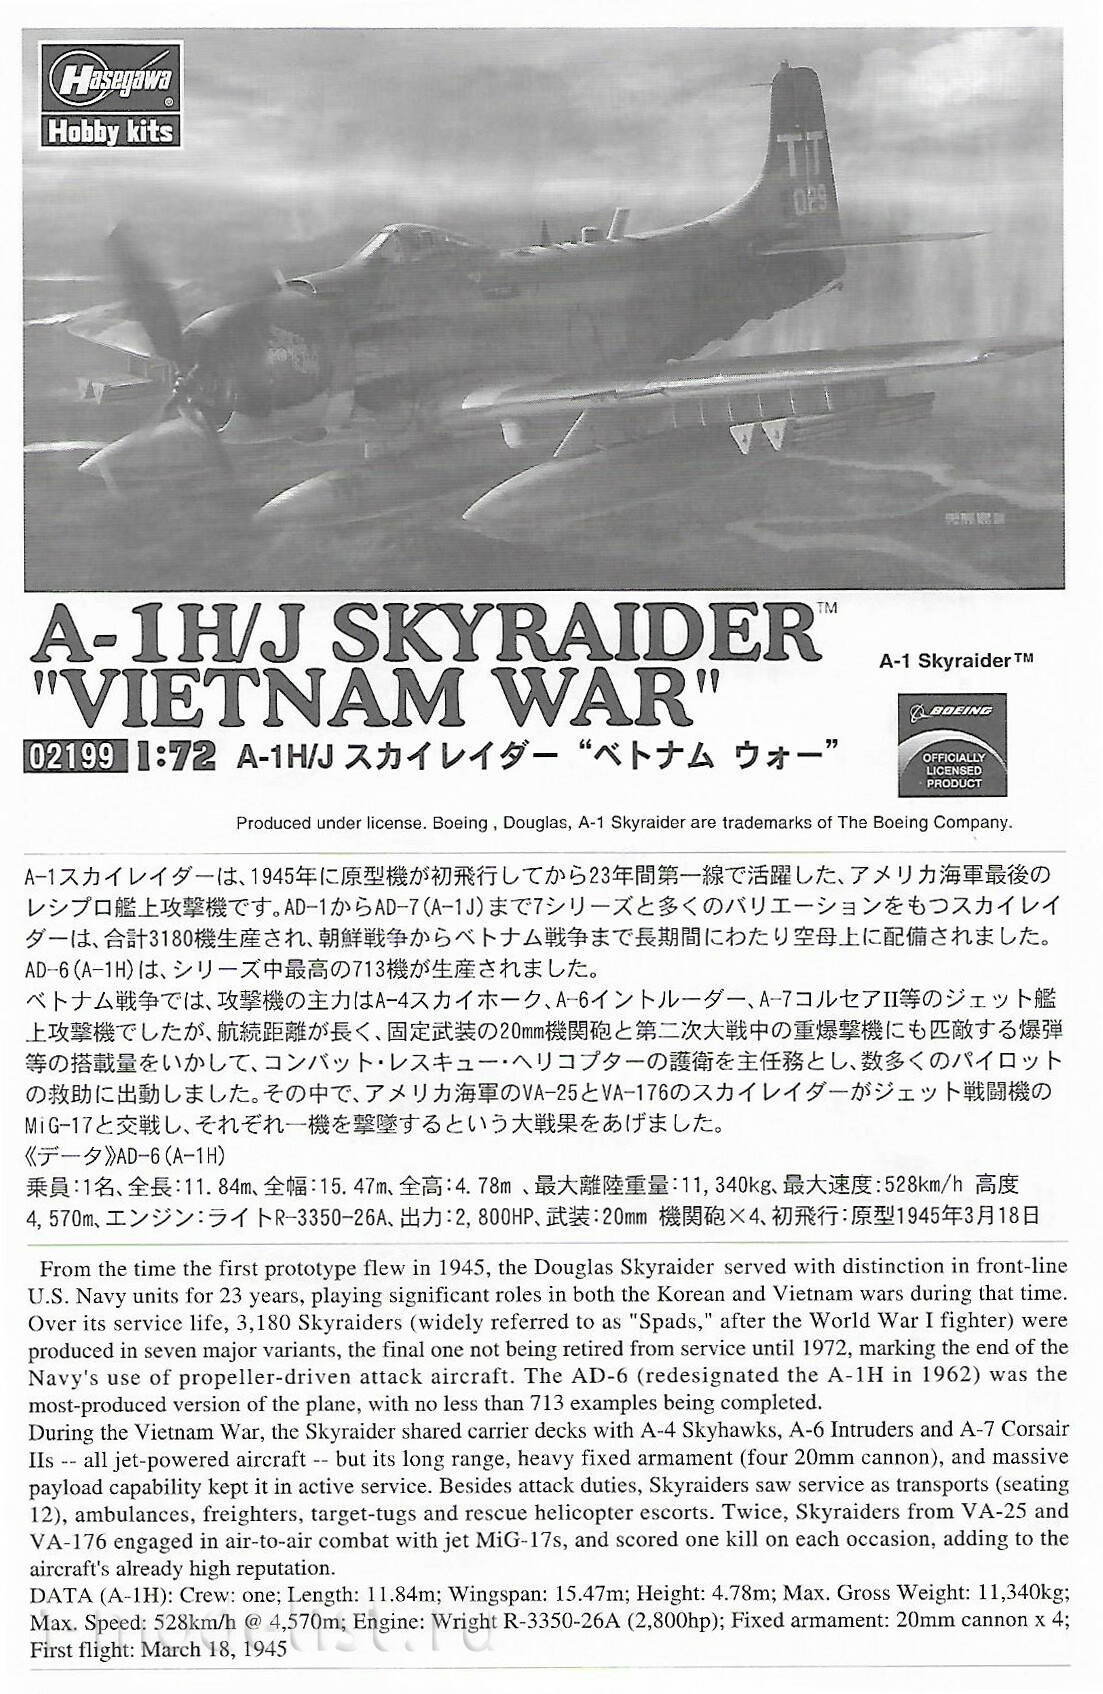 02199 Hasegawa 1/72 Douglas A-1H/J Skyraider Vietnam War Aircraft